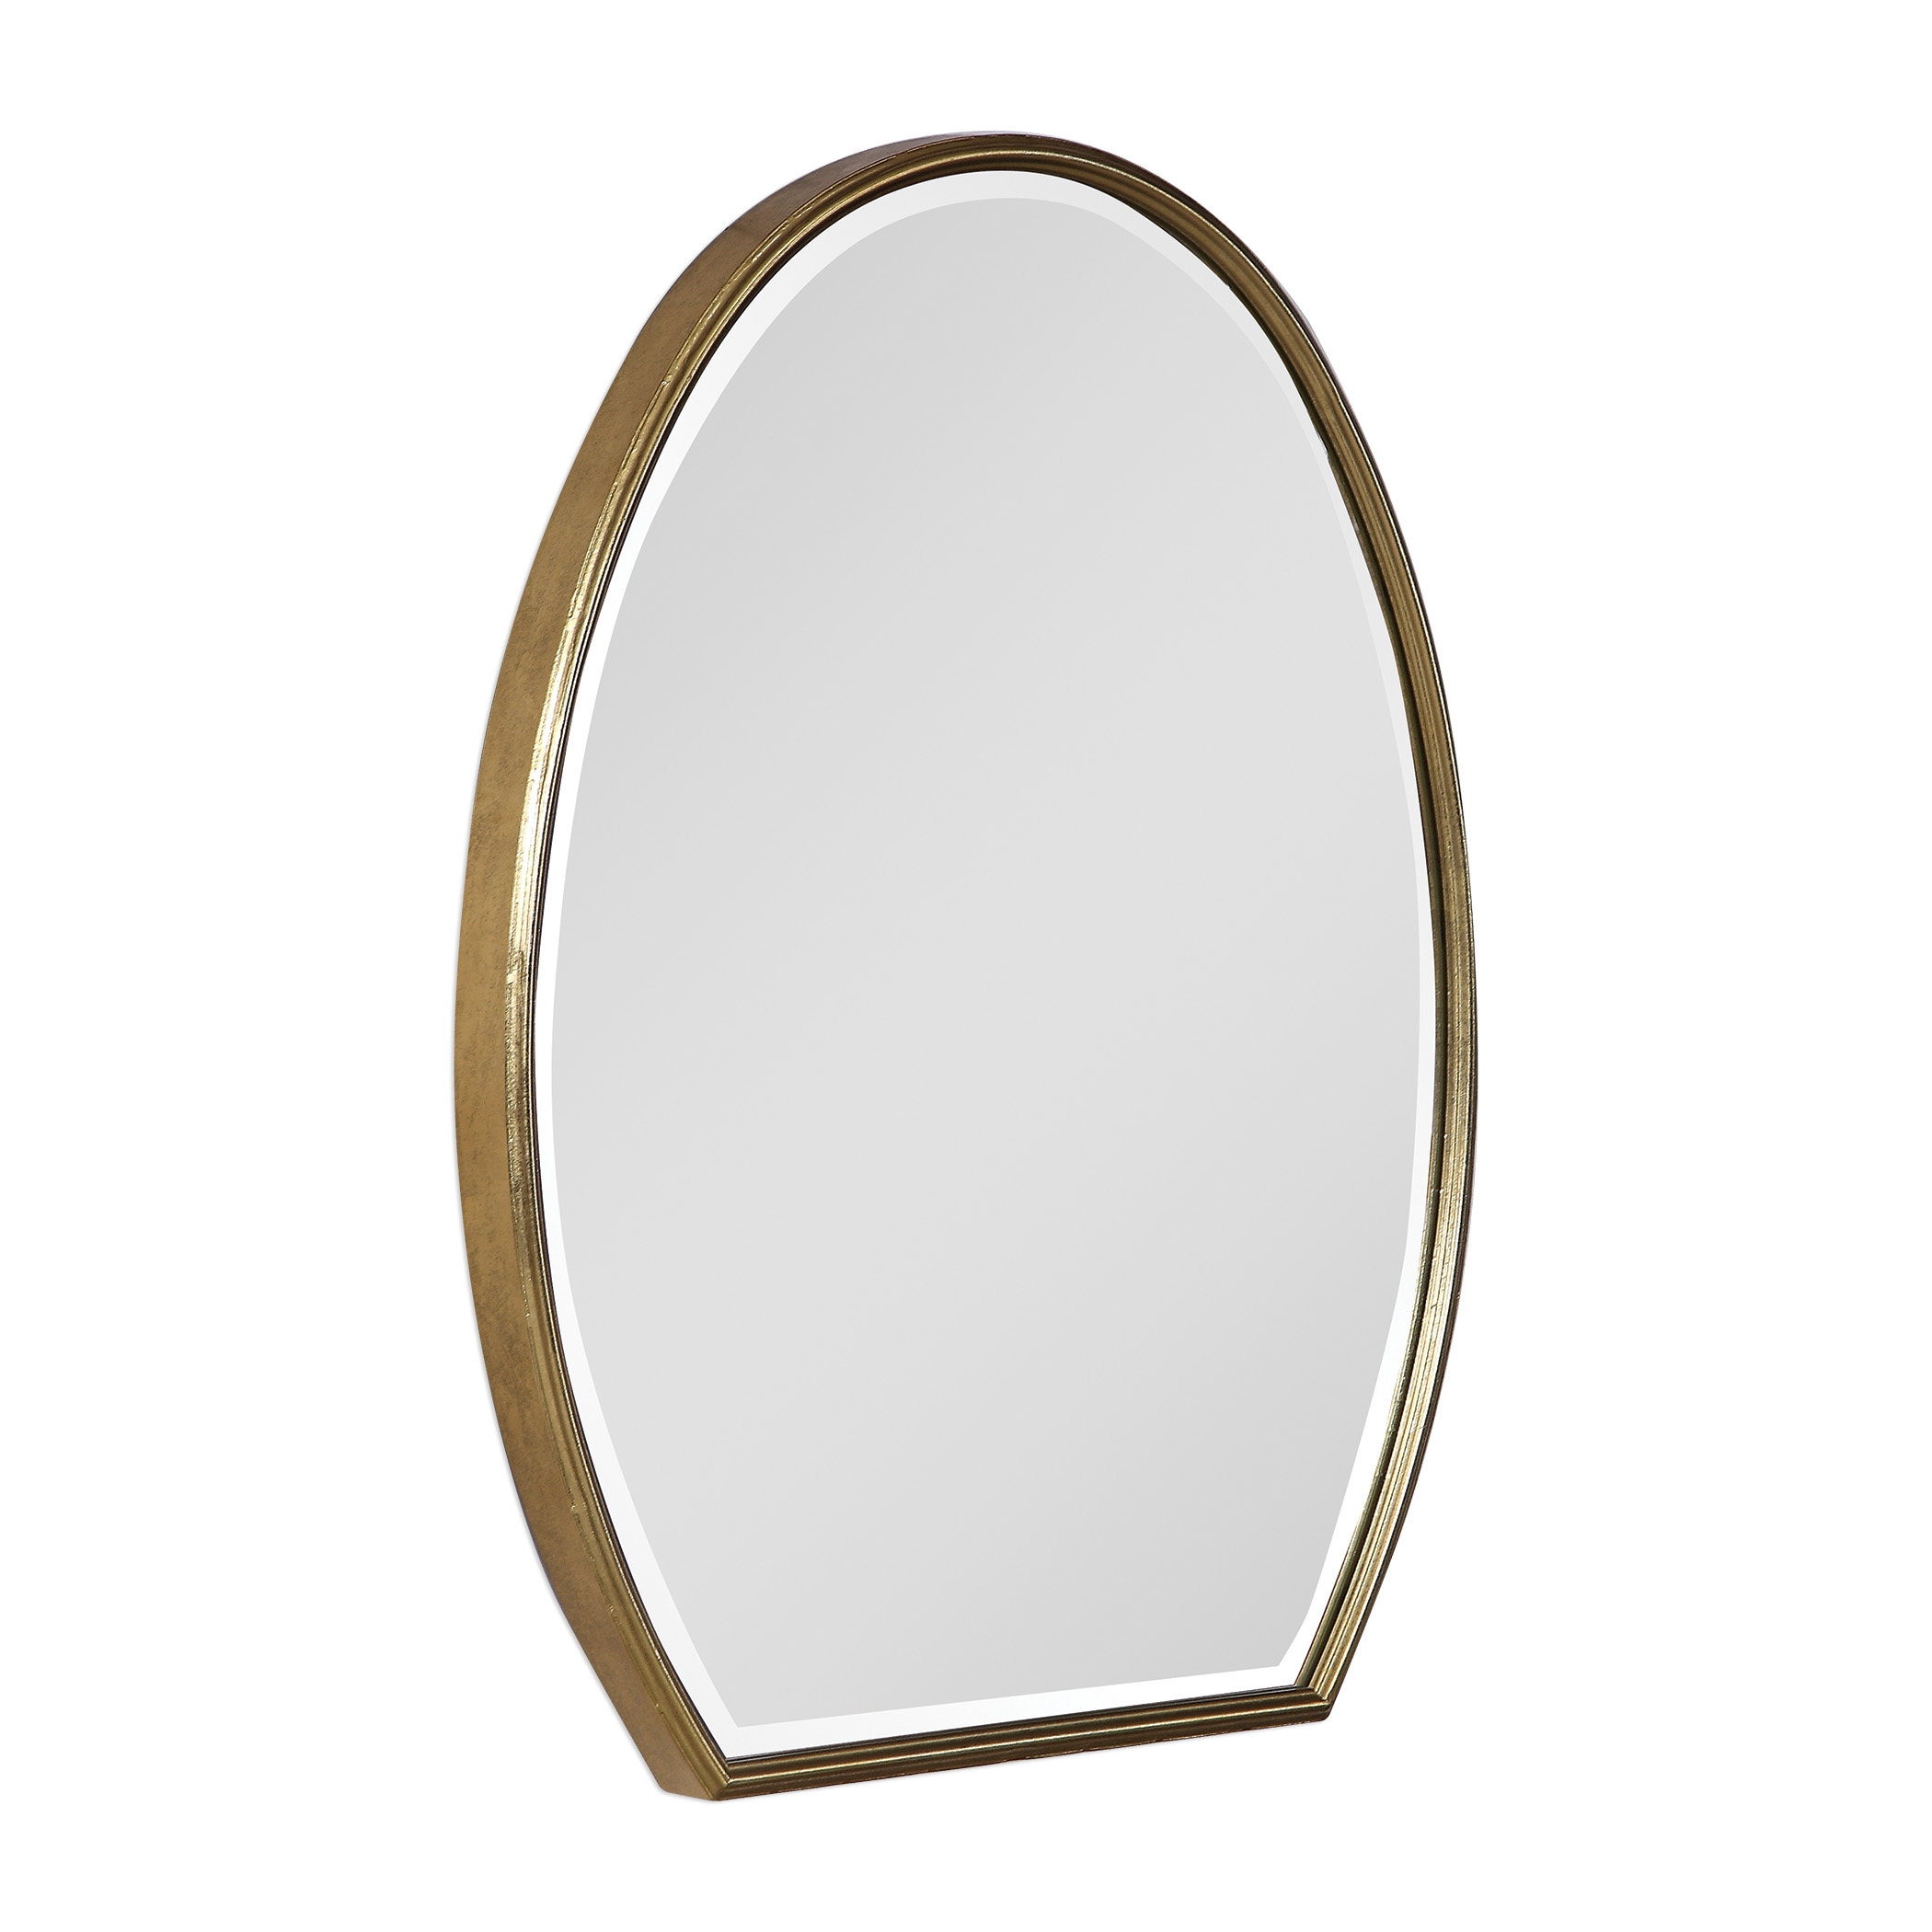 Kenzo Modified Oval Mirror - Image 3